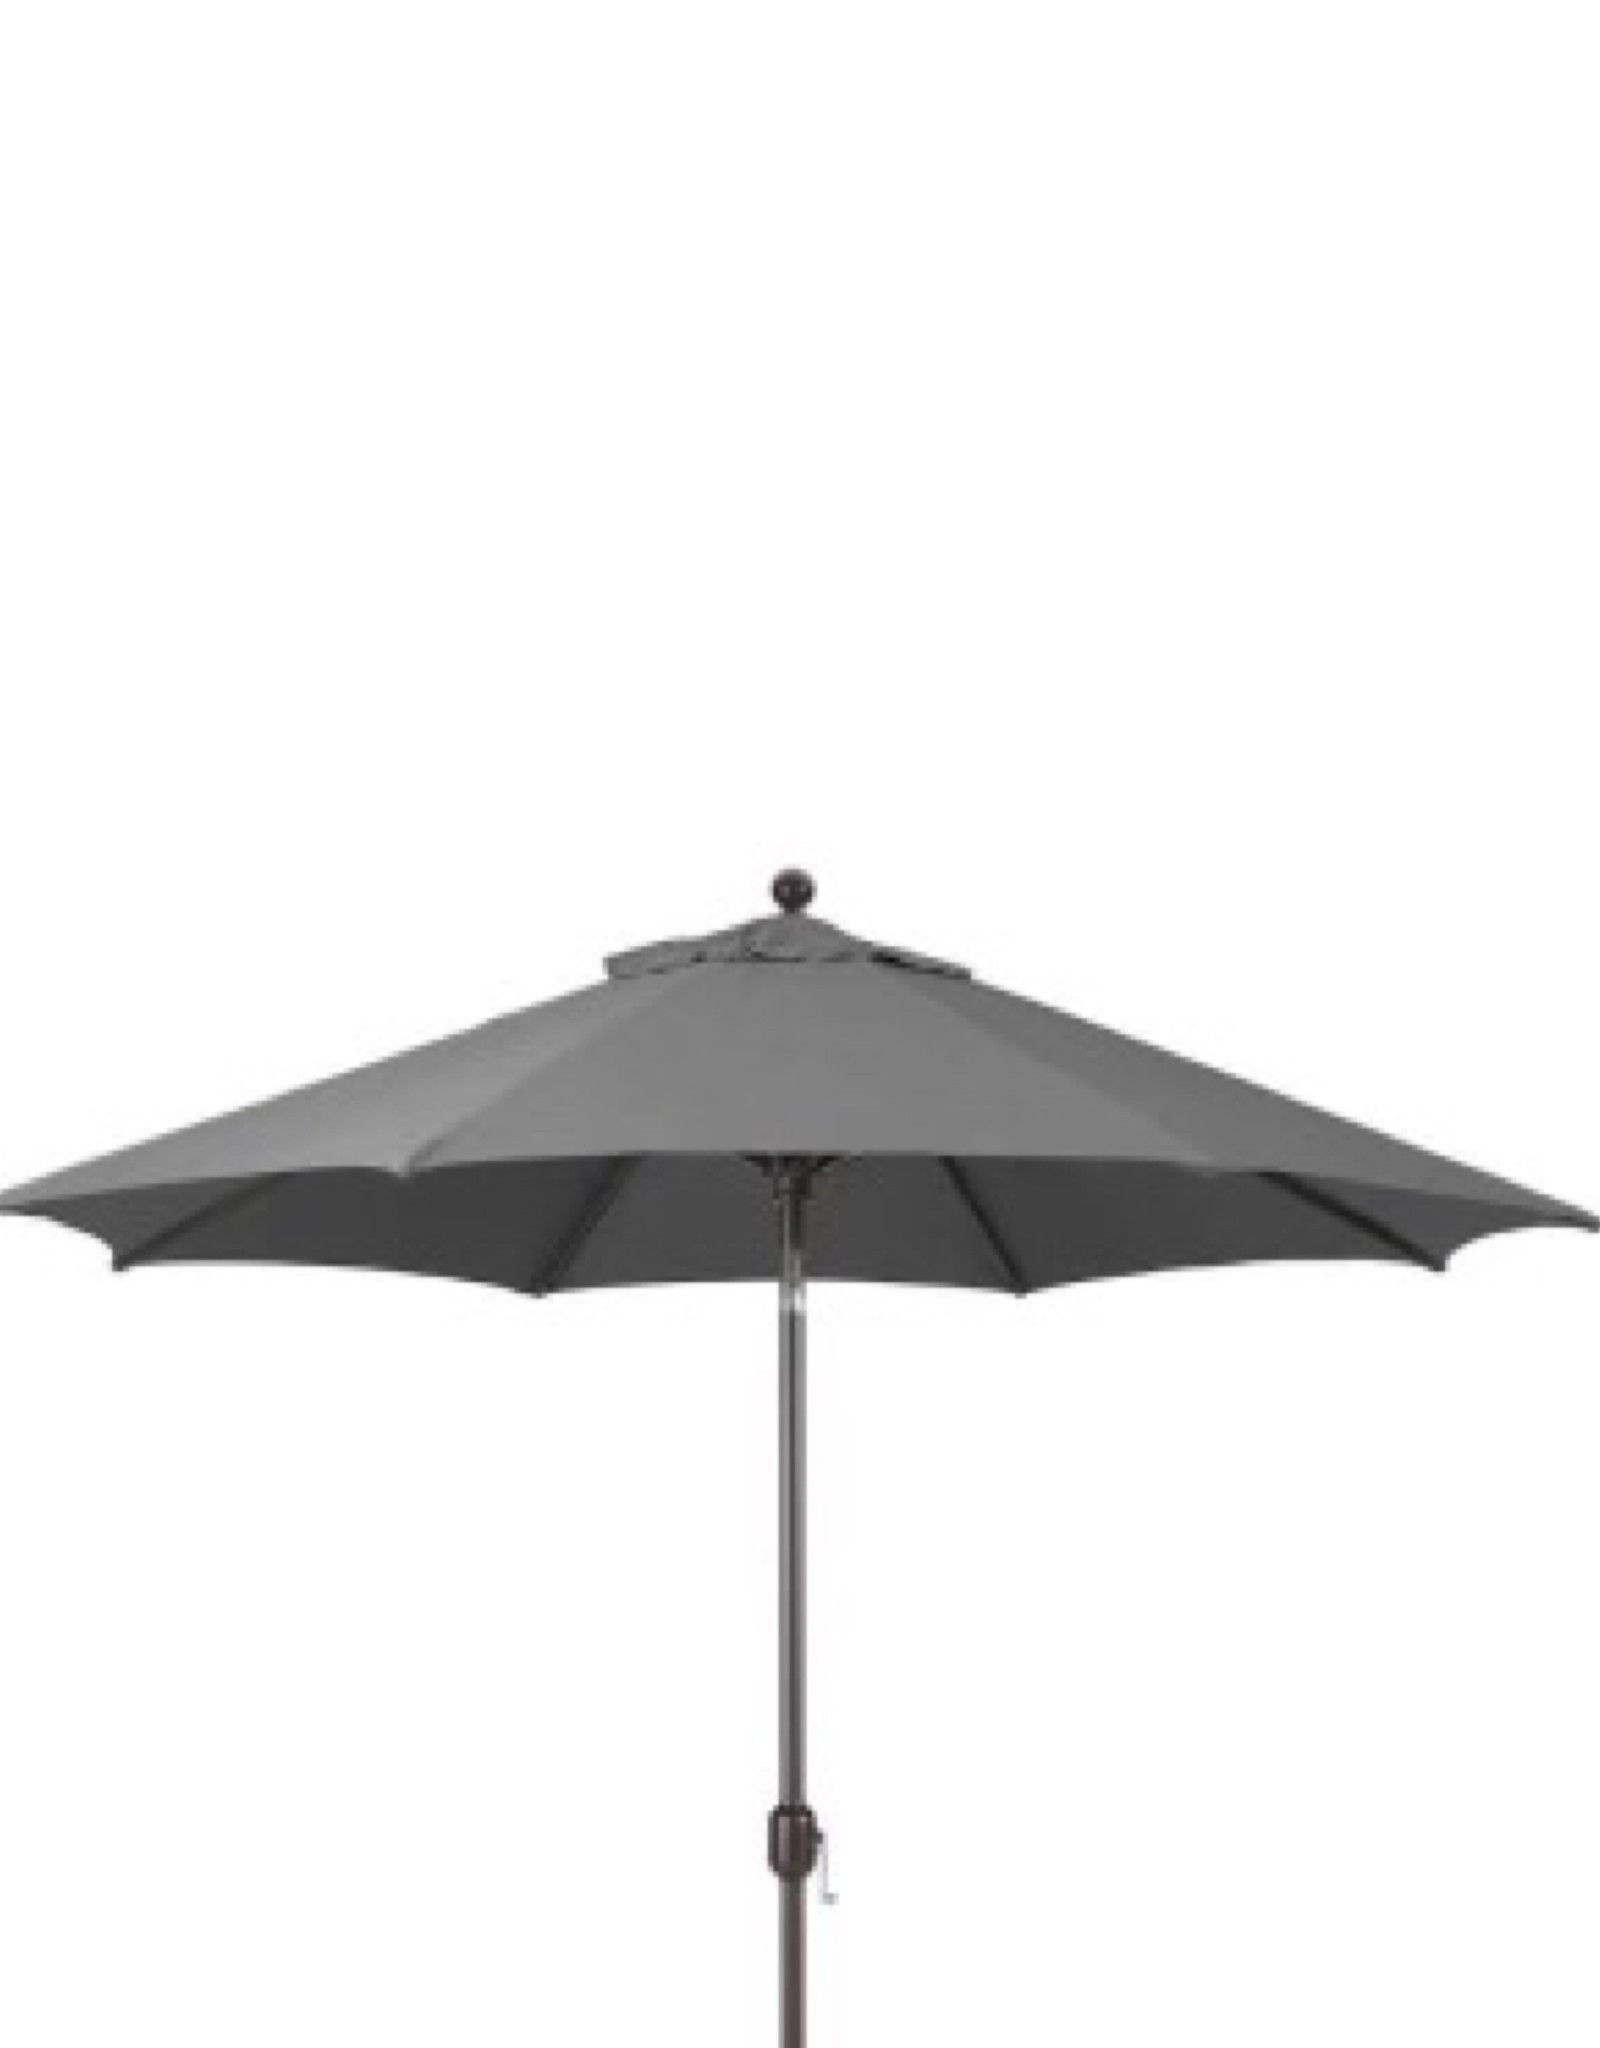 Ratana Ratana Umbrellas 9 FT UM00906BRZ/C Canvas Coal F05158